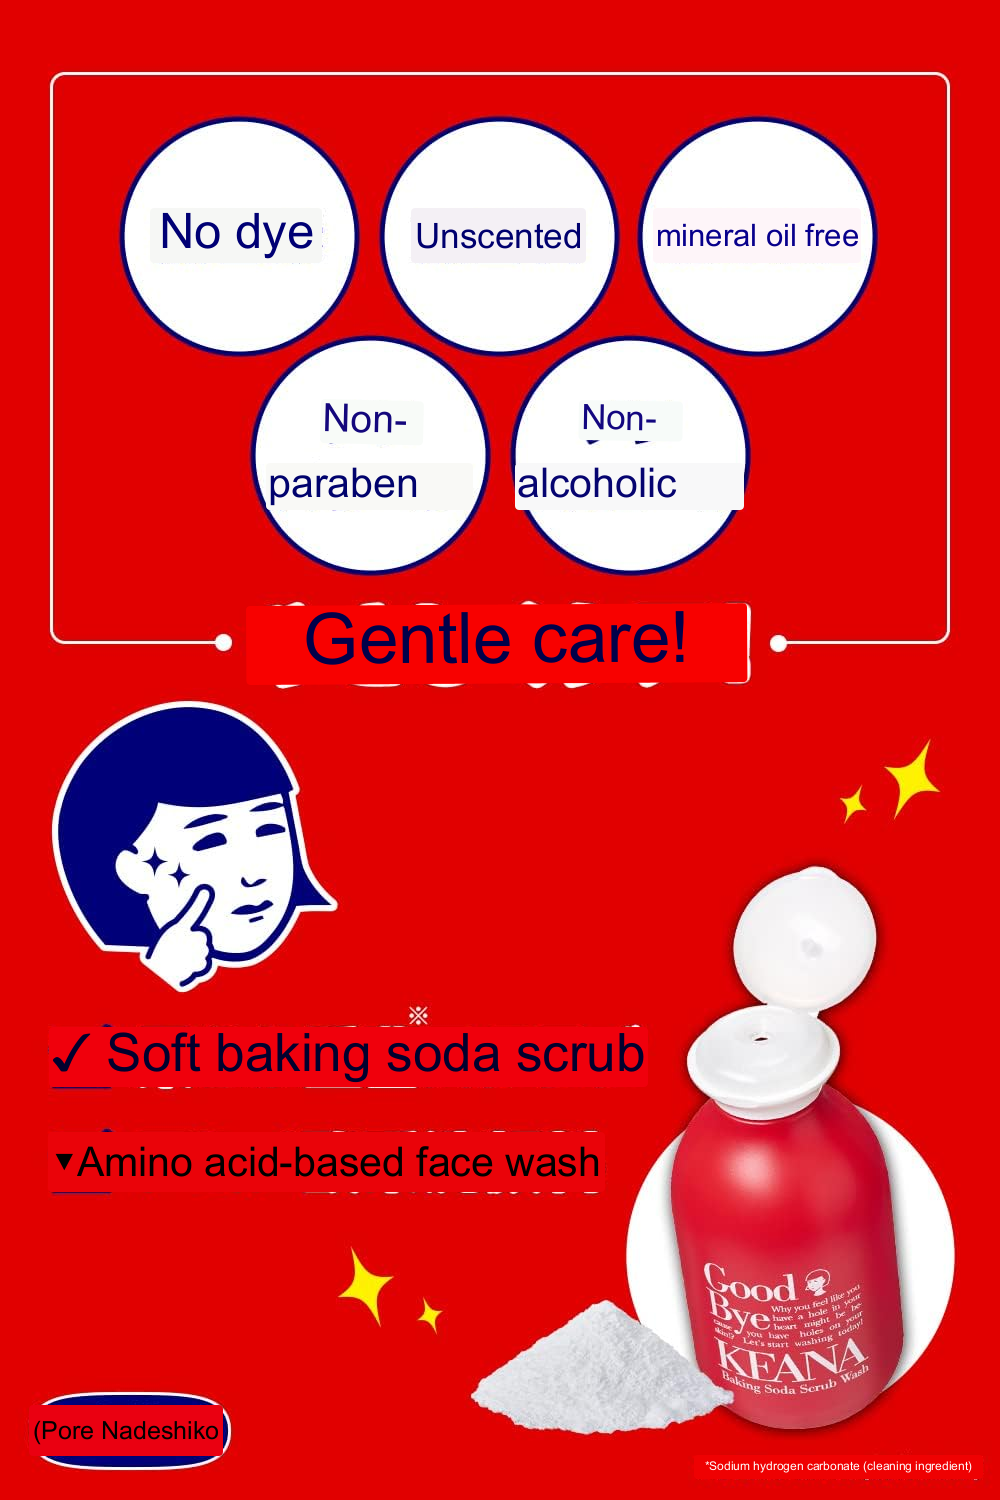 Keana Nadeshiko Baking Soda Scrub Facial Cleansing Powder 100g